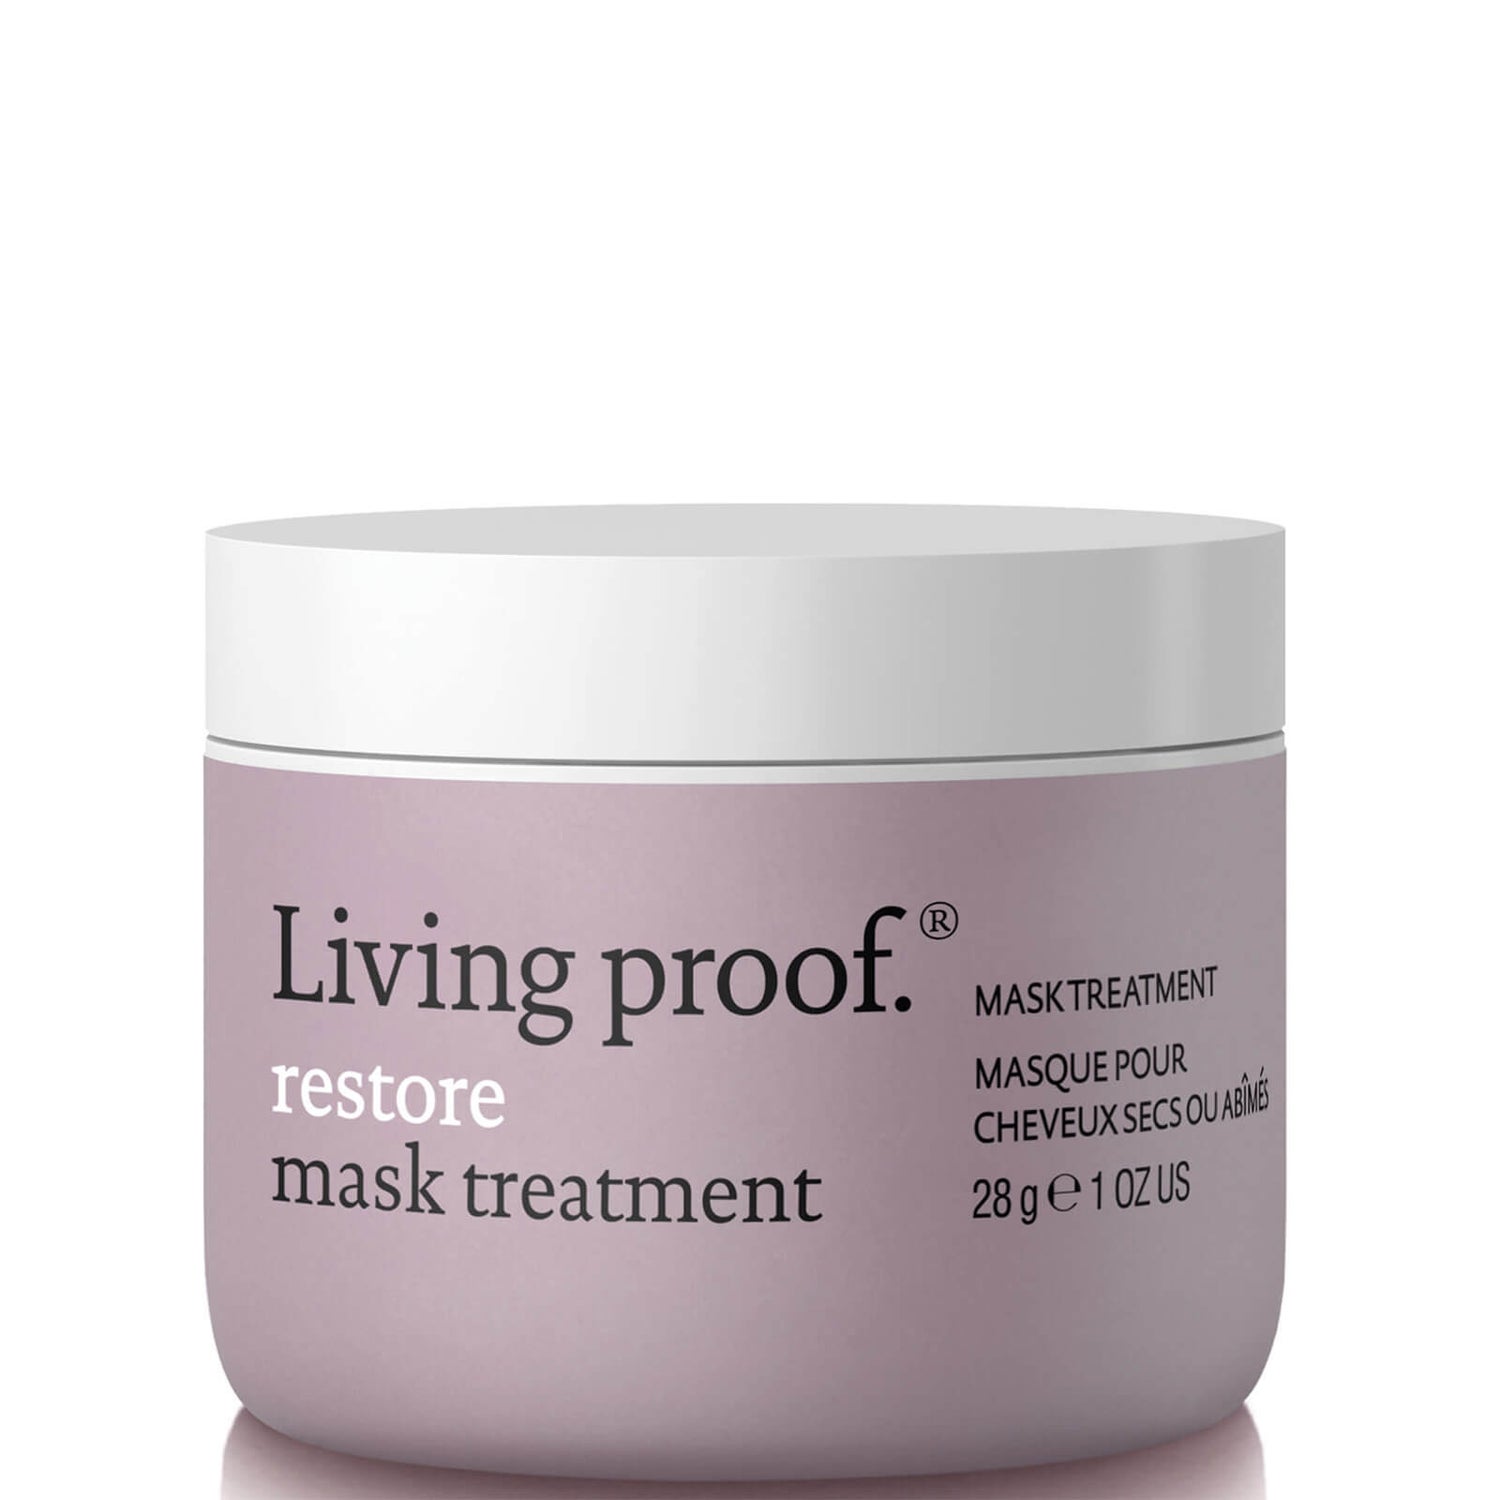 Tratamiento con mascarilla Restore de Living Proof.® 28 g